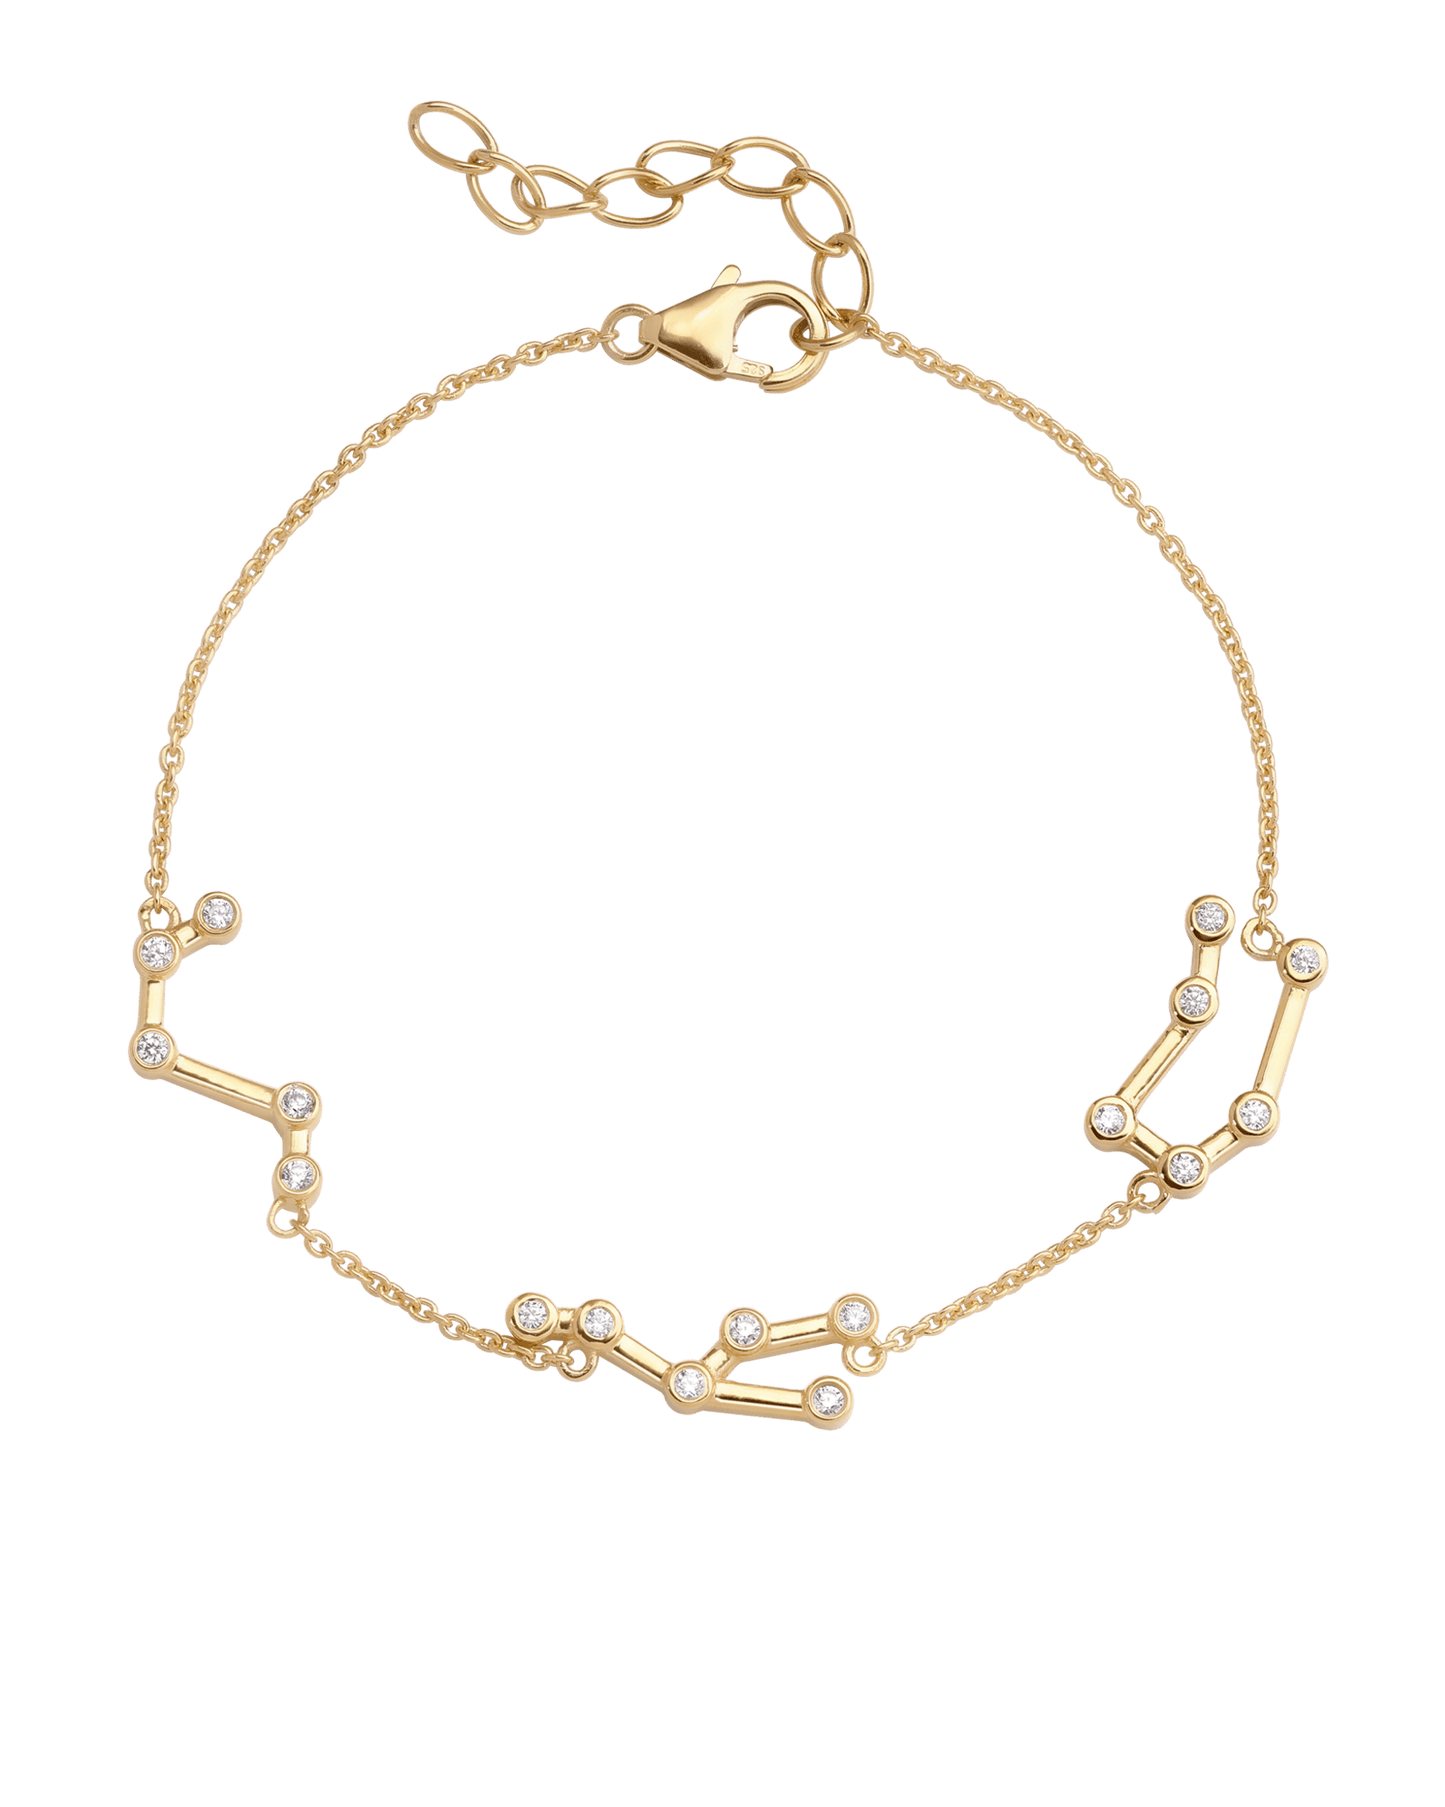 Constellation Bracelet - 18K Gold Vermeil Bracelets magal-dev 1 Constellation 6" + 1" Extender 